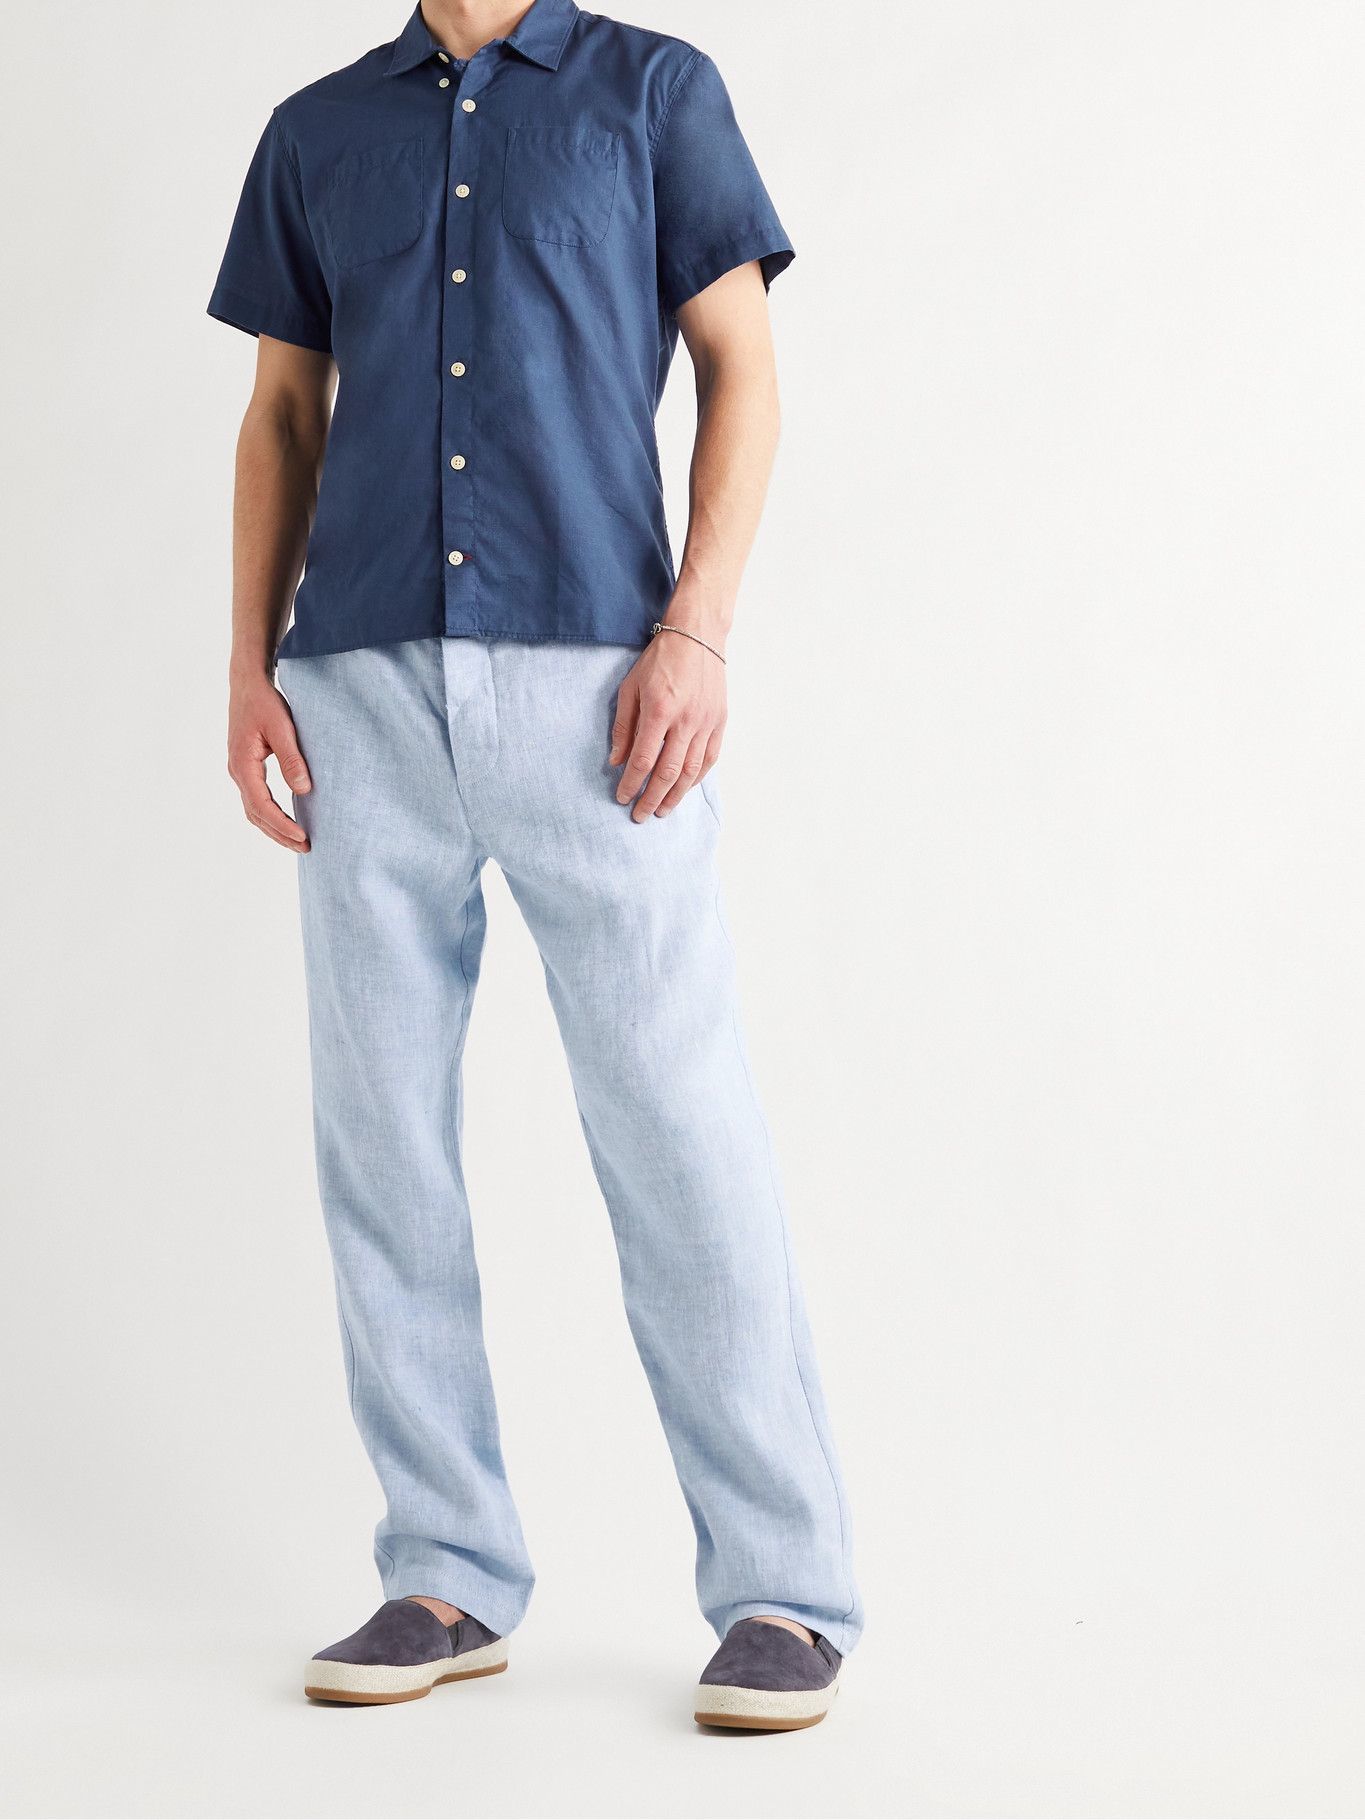 OLIVER SPENCER - Convertible-Collar Cotton Shirt - Blue